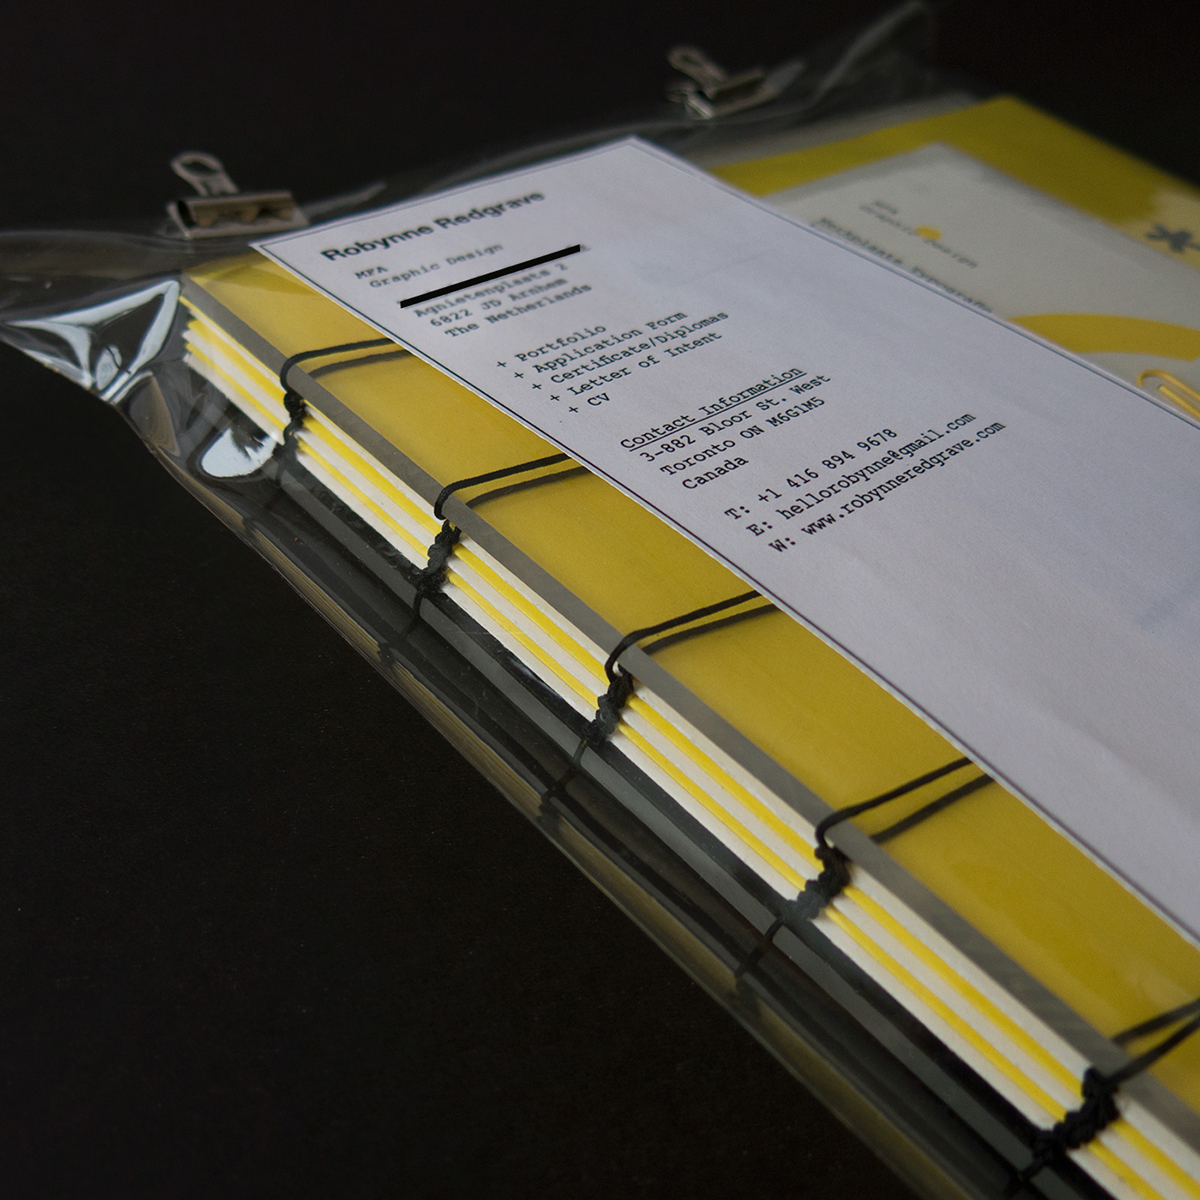 portfolio mailer portfolio package mailer application Bookbinding acrylic cover type yellow envelope CV Resume Documents packaging design